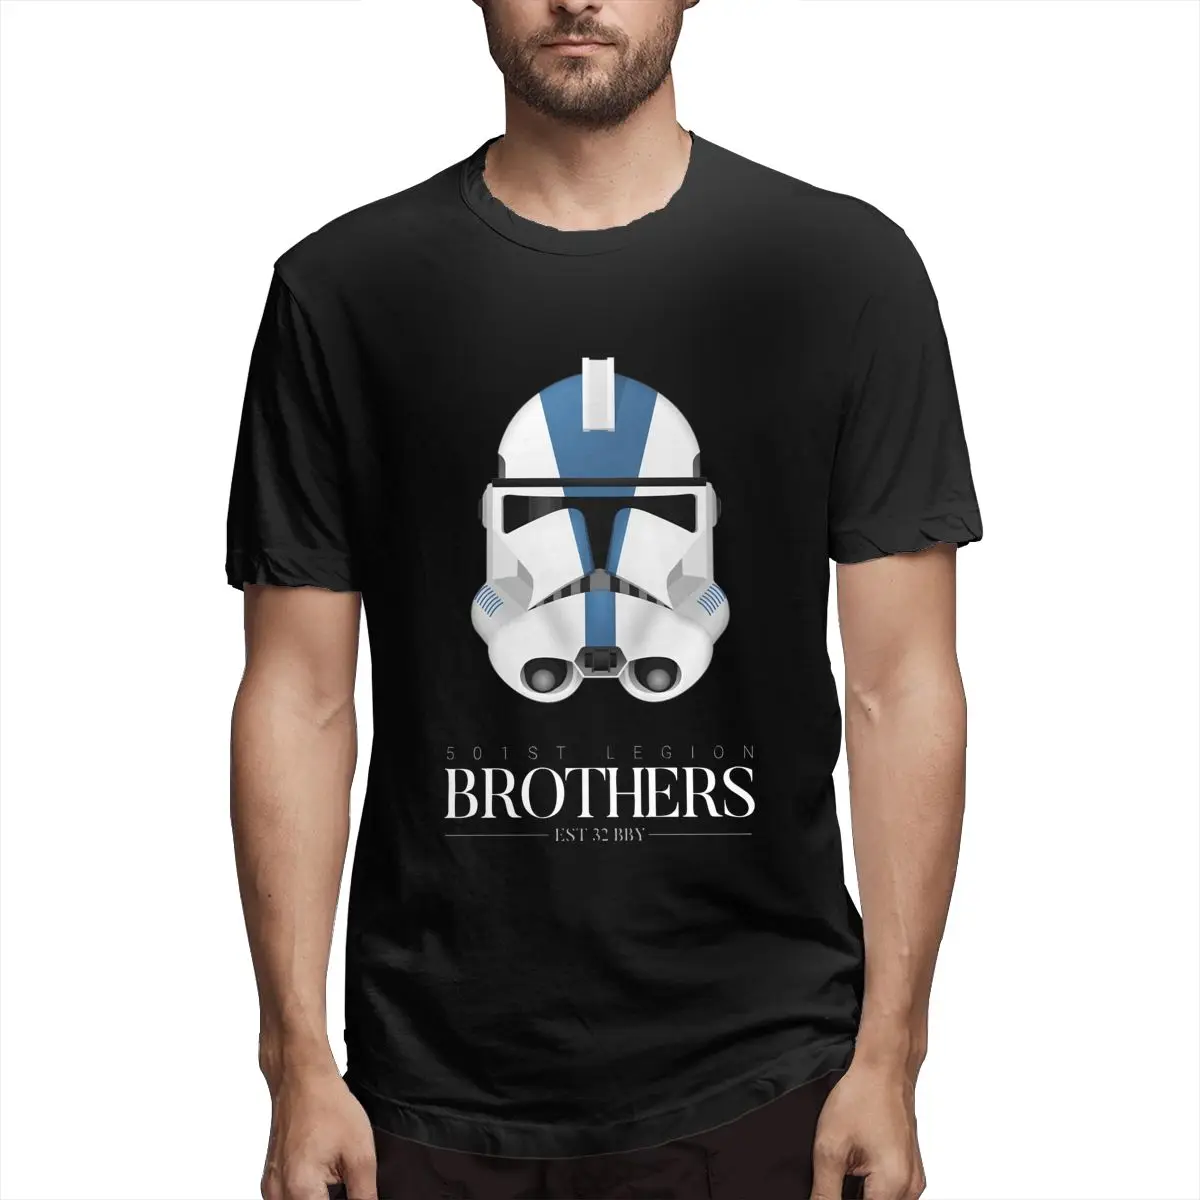 Spartan 501st Legion Clone Trooper Brothers Creative Short Sleeve Round Collar Men's T-Shirt 100% Cotton Unique